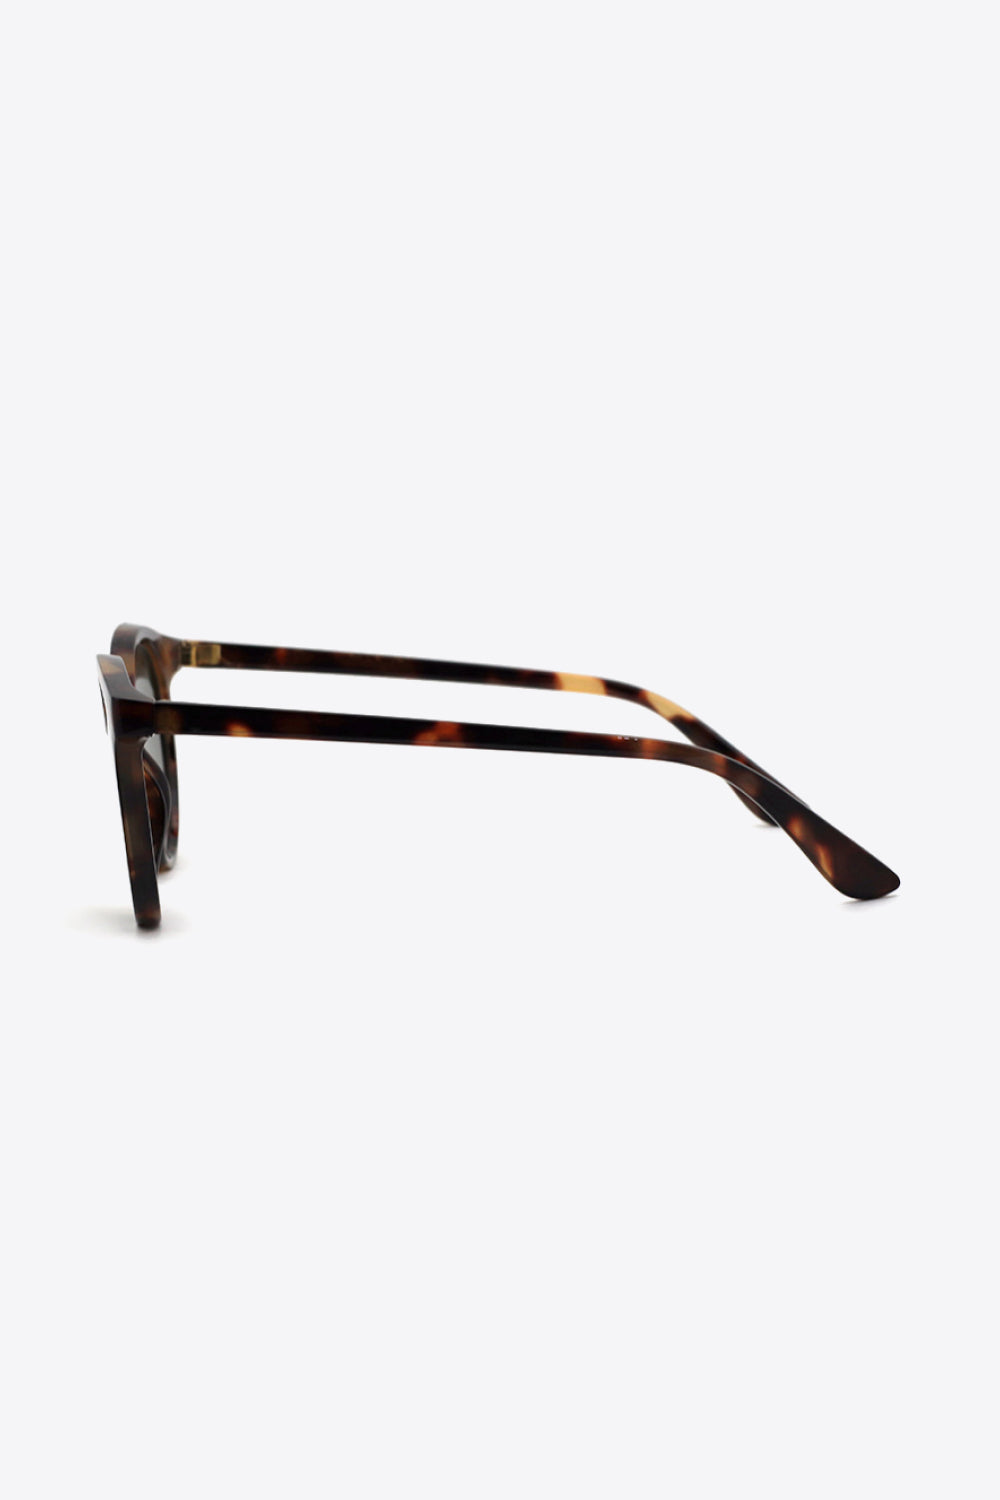 Tortoiseshell Round Polycarbonate Sunglasses Black One Size Sunglasses by Vim&Vigor | Vim&Vigor Boutique